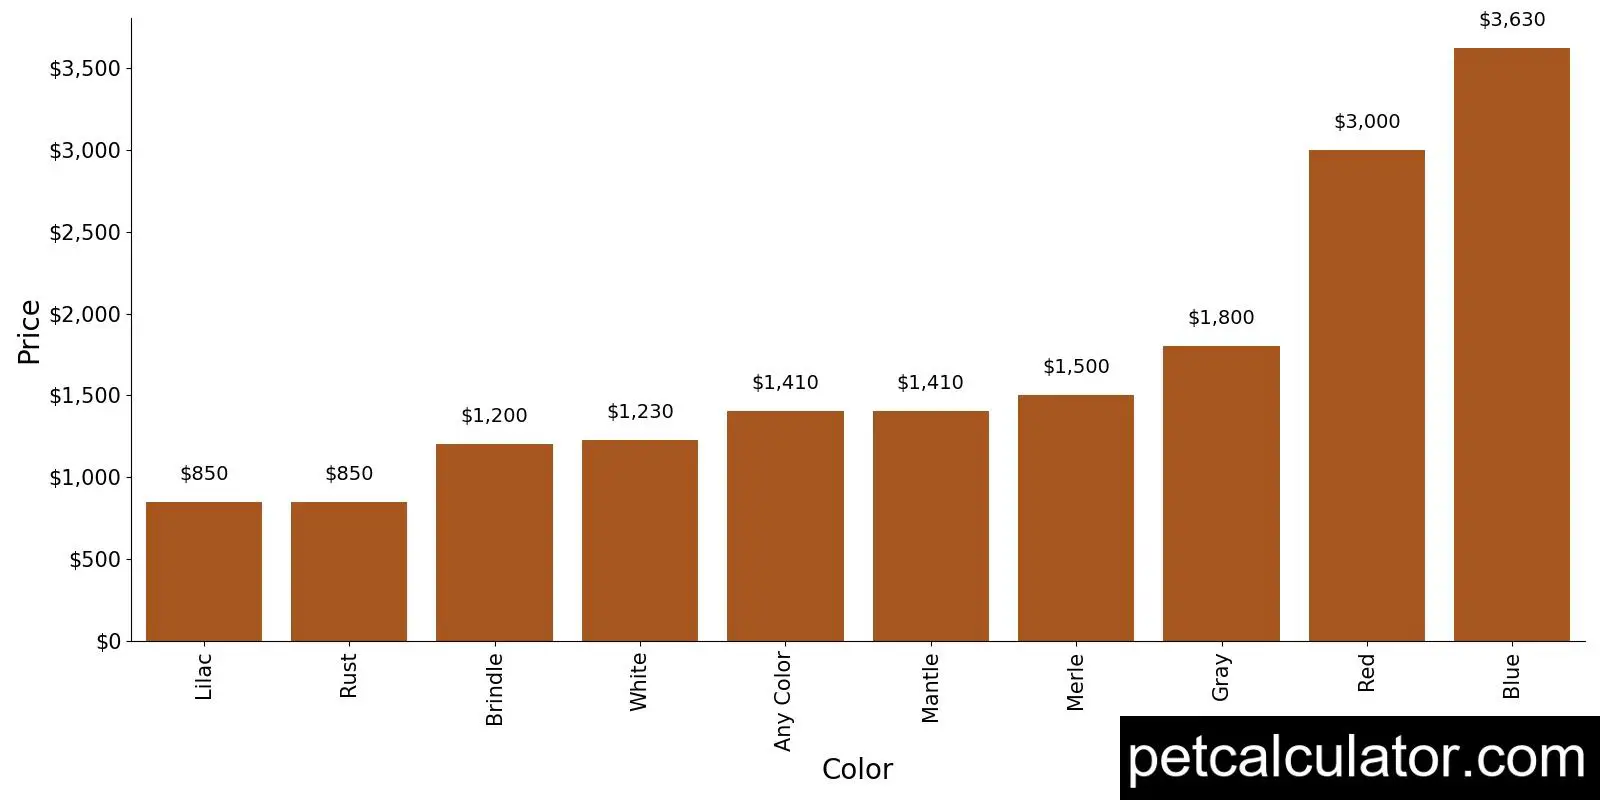 Price of Saint Bernard by Color 